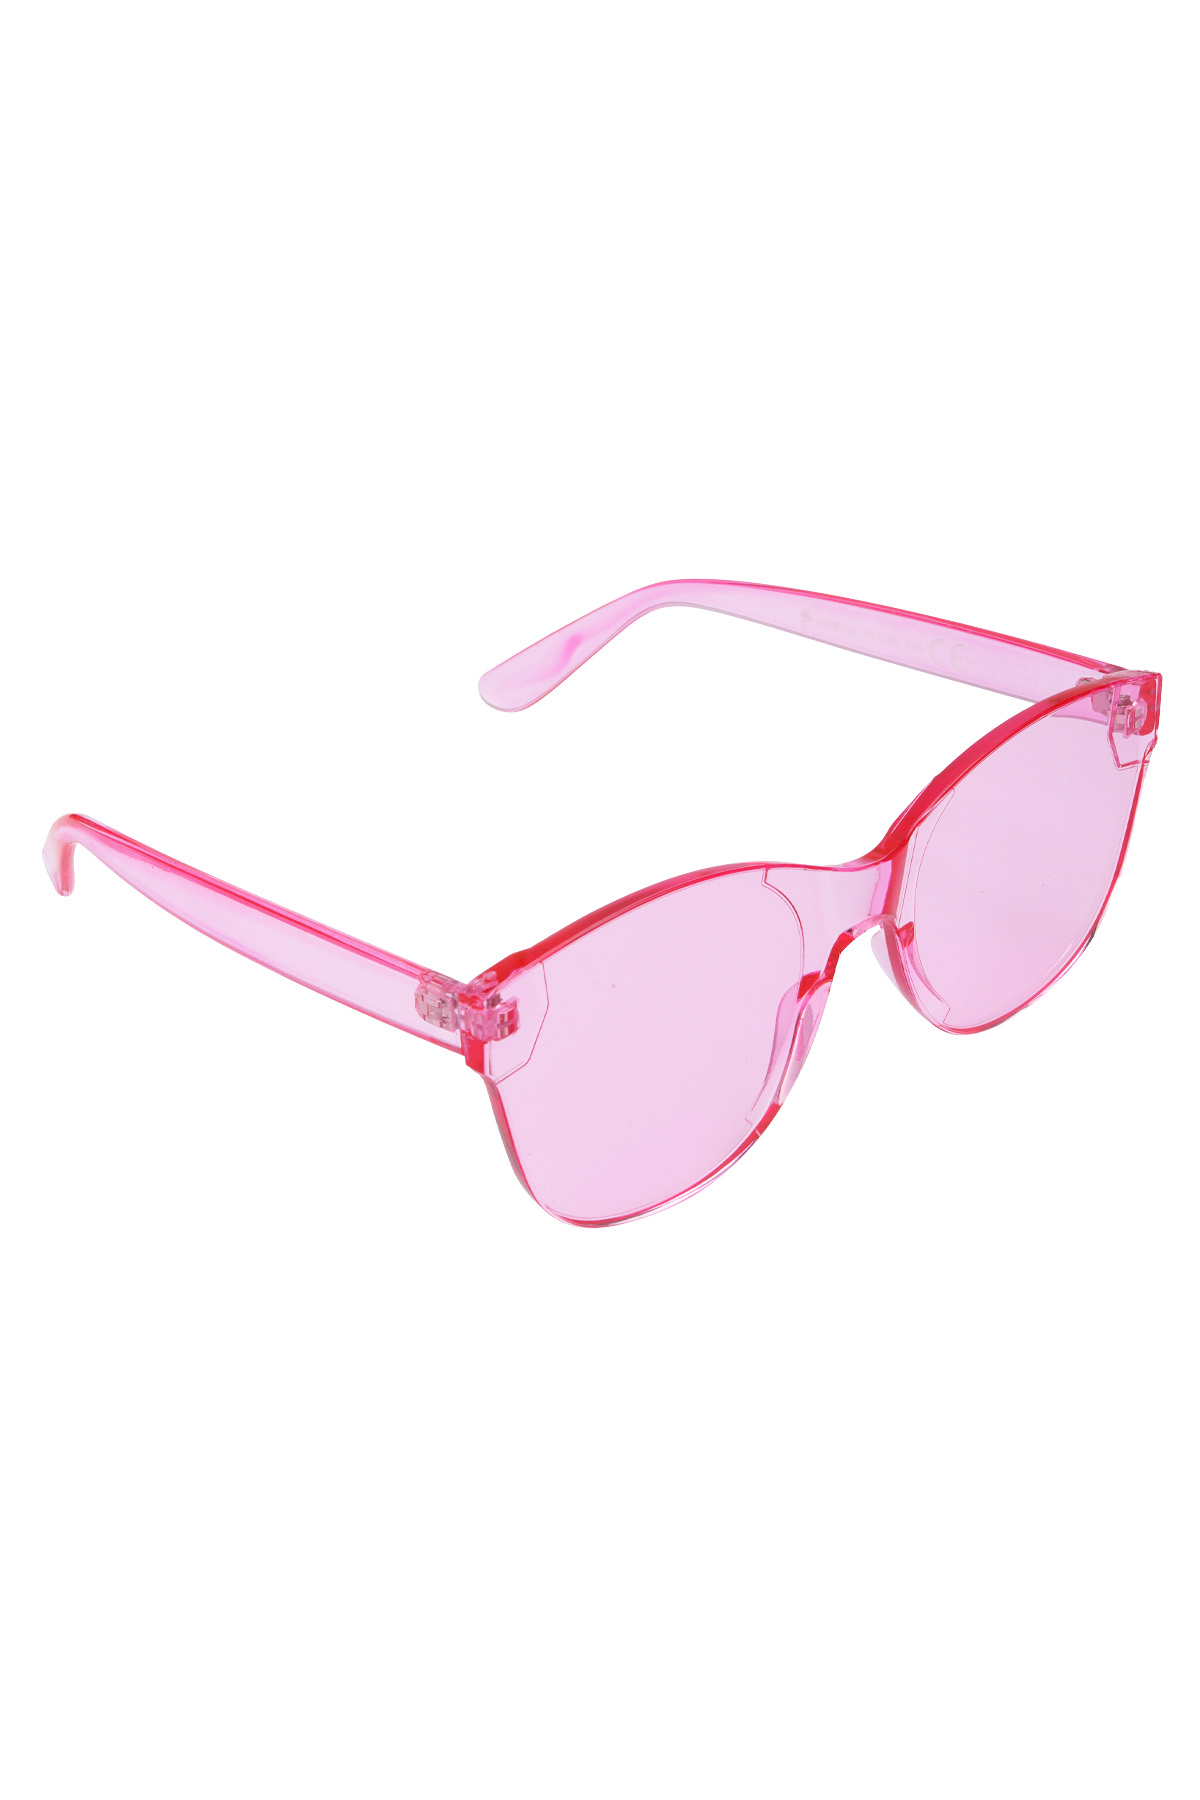 Single-color trendy sunglasses - pink